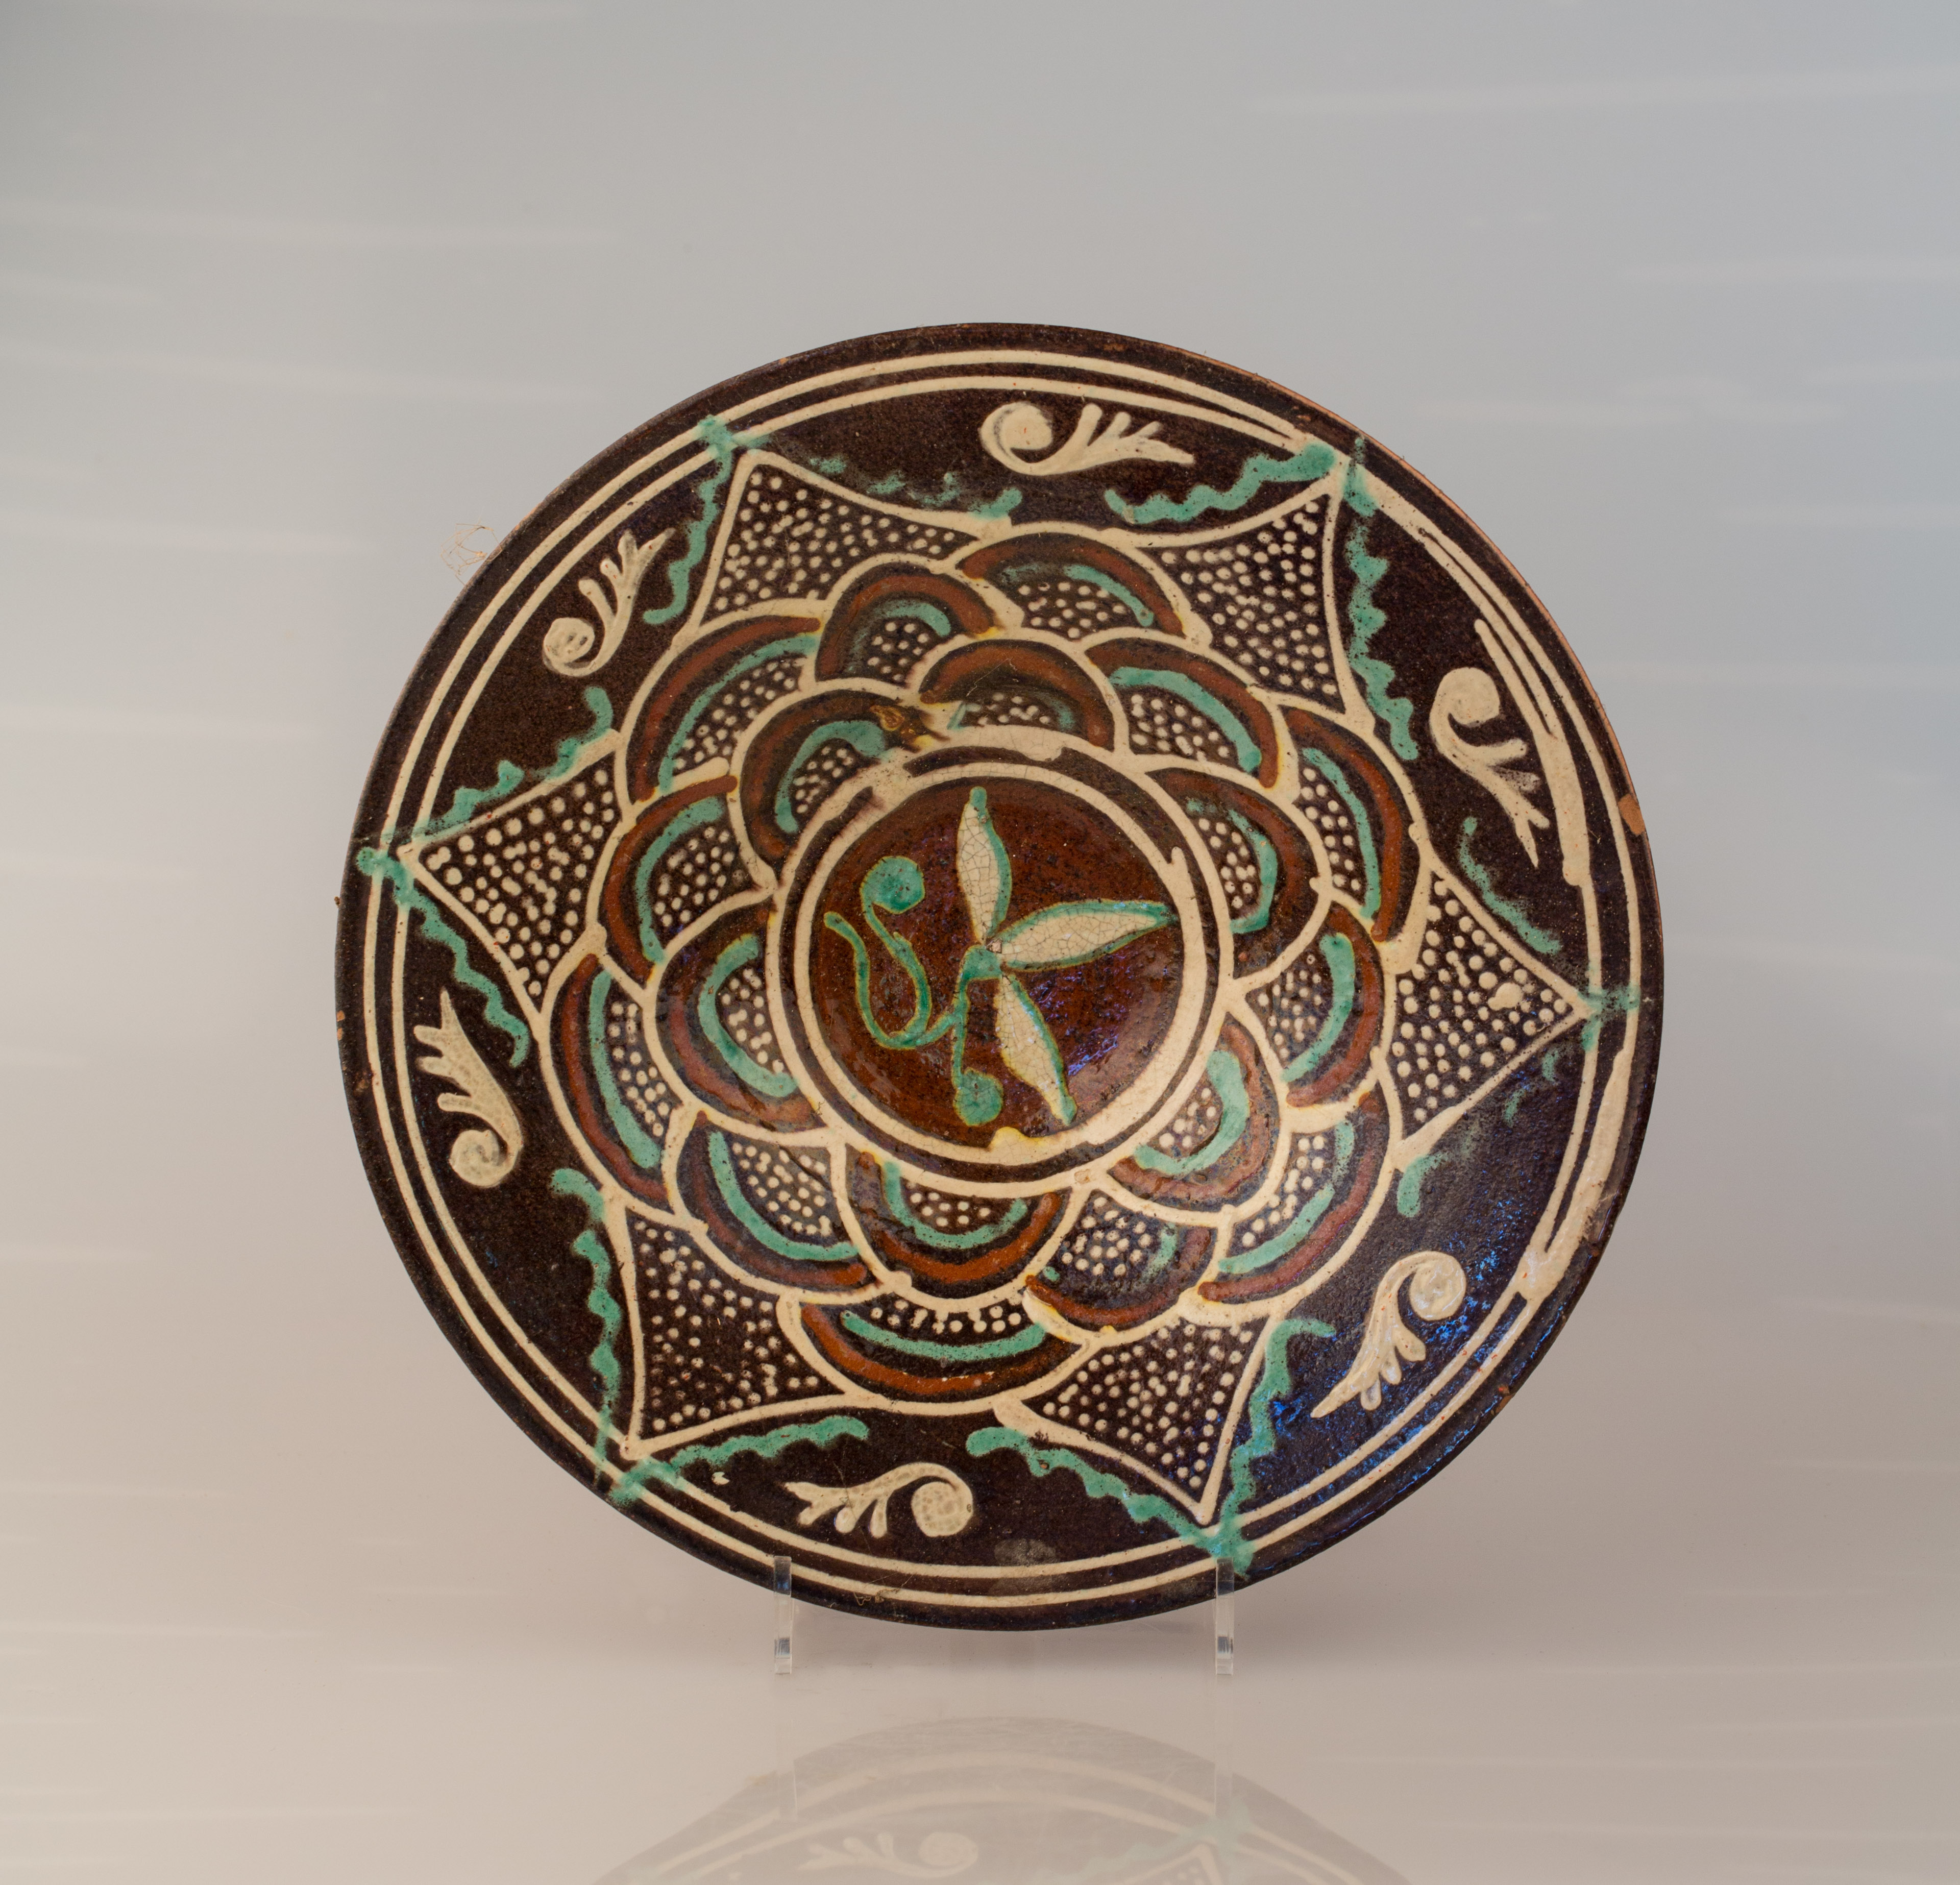 20140707 Radkersburg - Decorative plates (Gombosz collection) - H4268